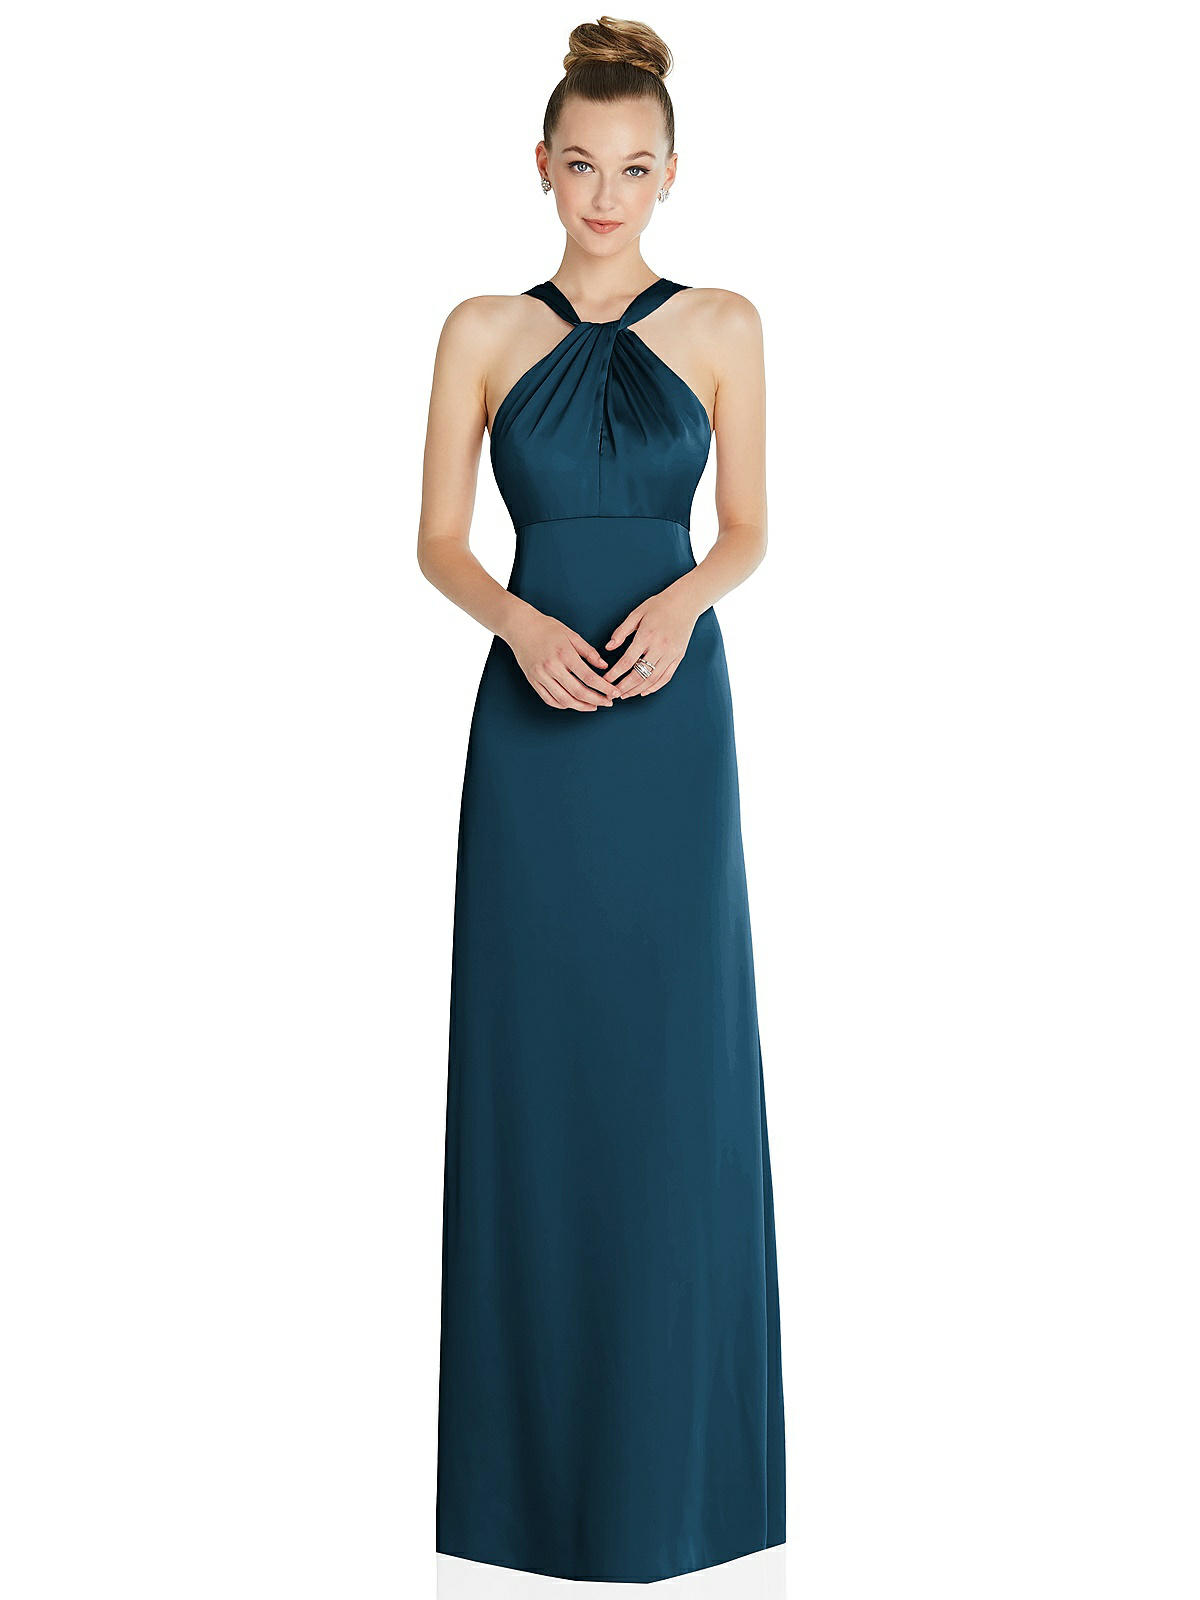 M718, Elegant Low V-Neck Crepe Bridesmaid Dress